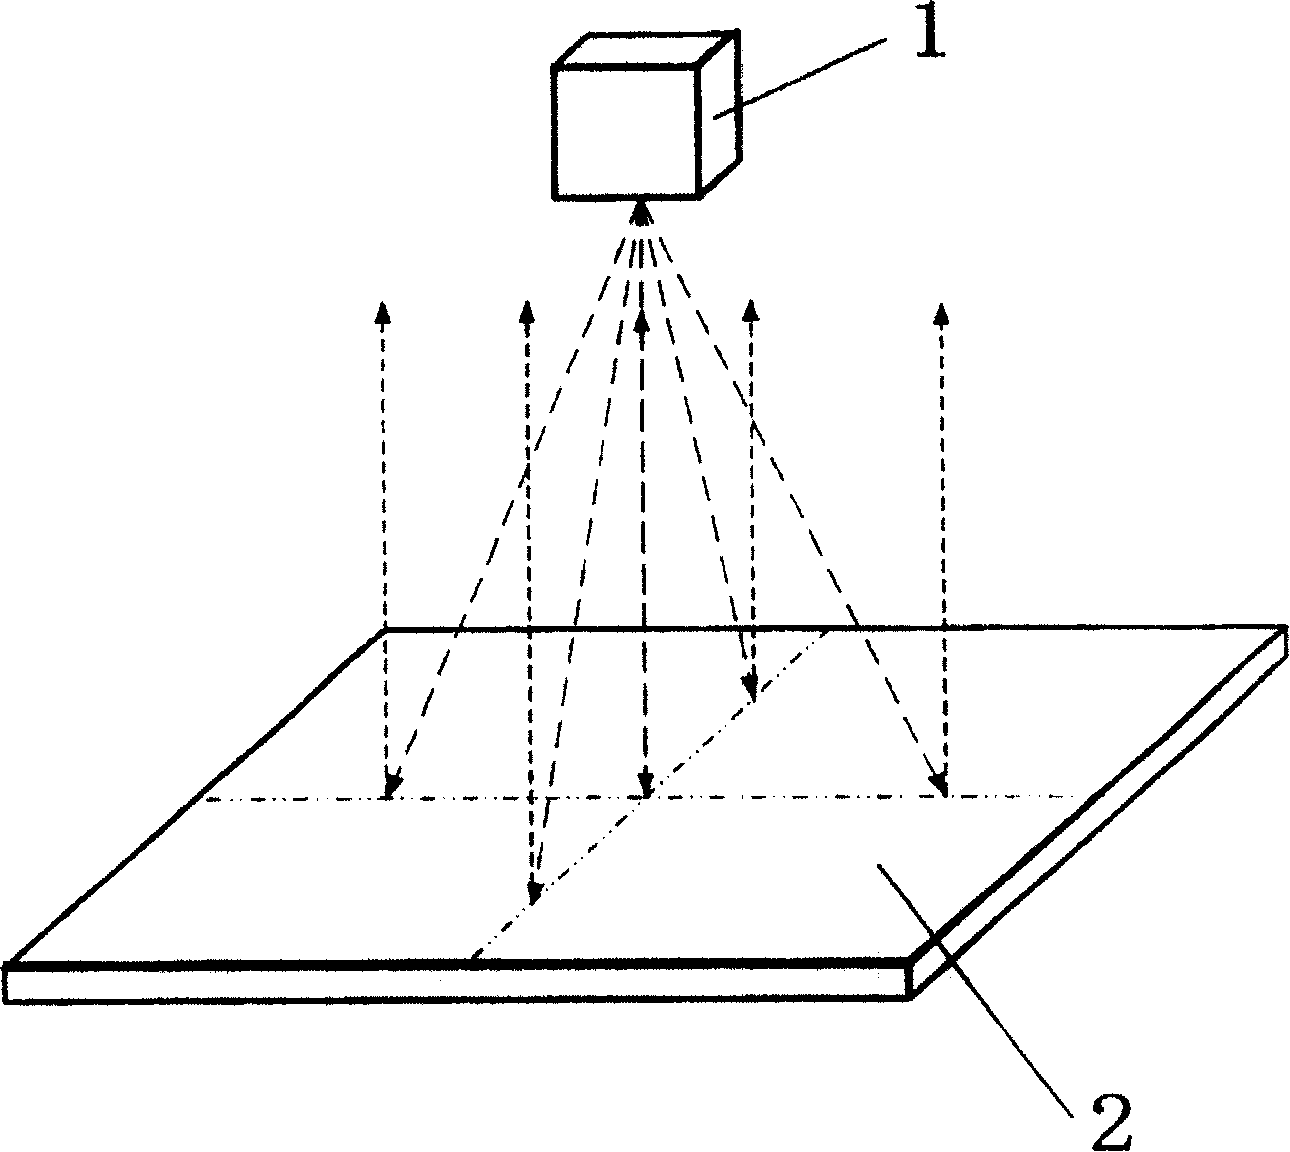 Variable-polarization microstrip reflectarray antenna